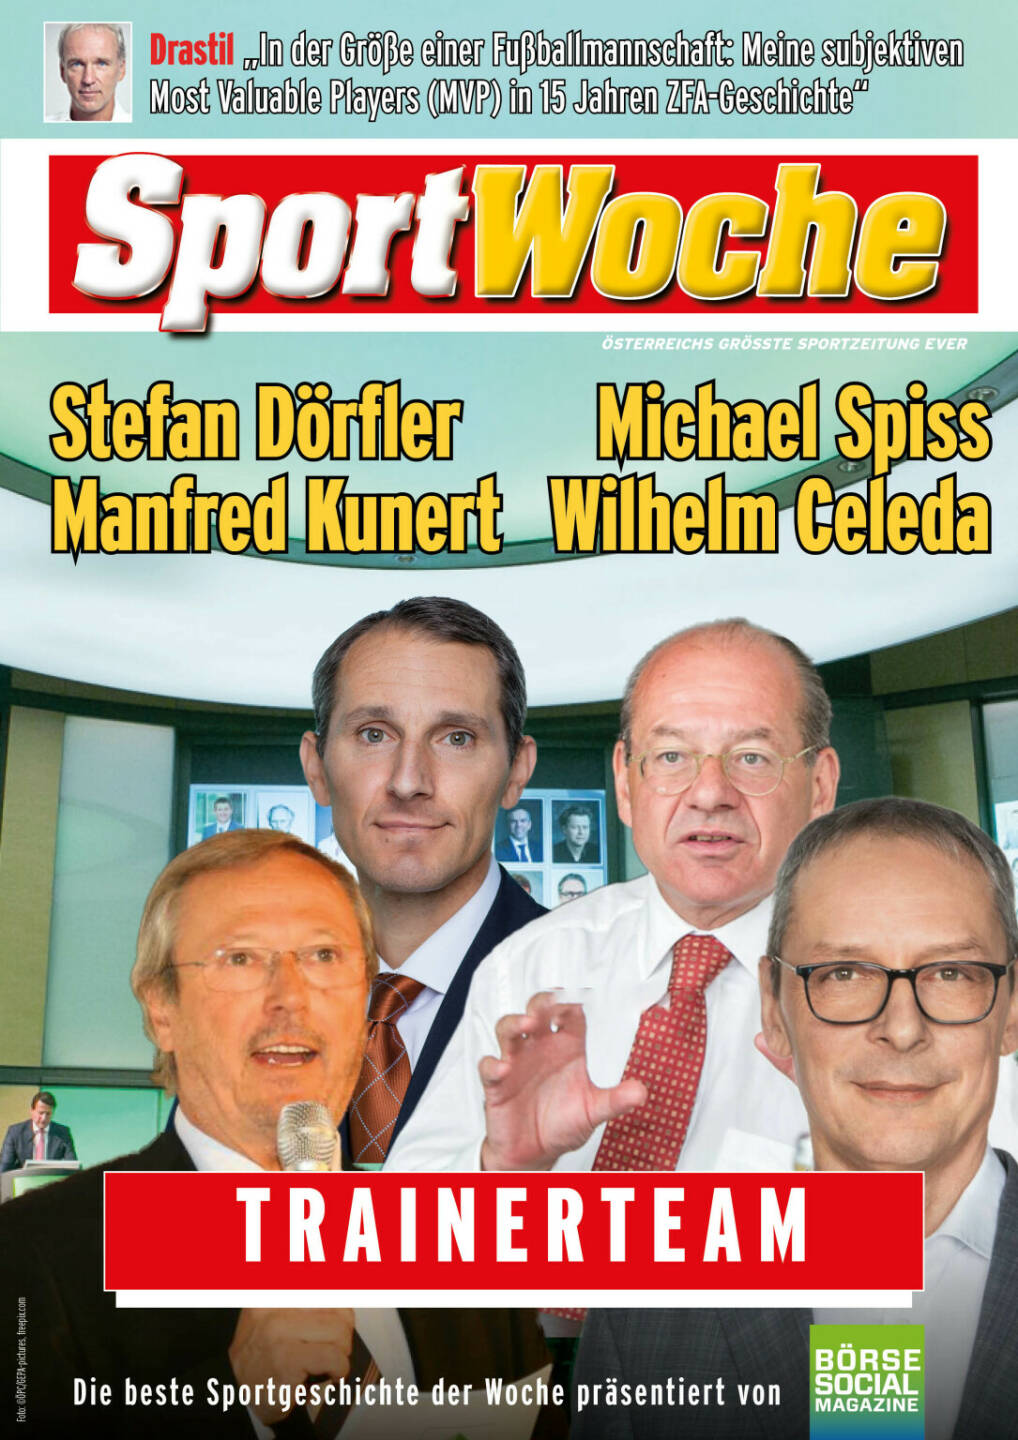 Trainerteam - Stefan Dörfler, Michael Spiss, Manfred Kunert, Wilhelm Celeda